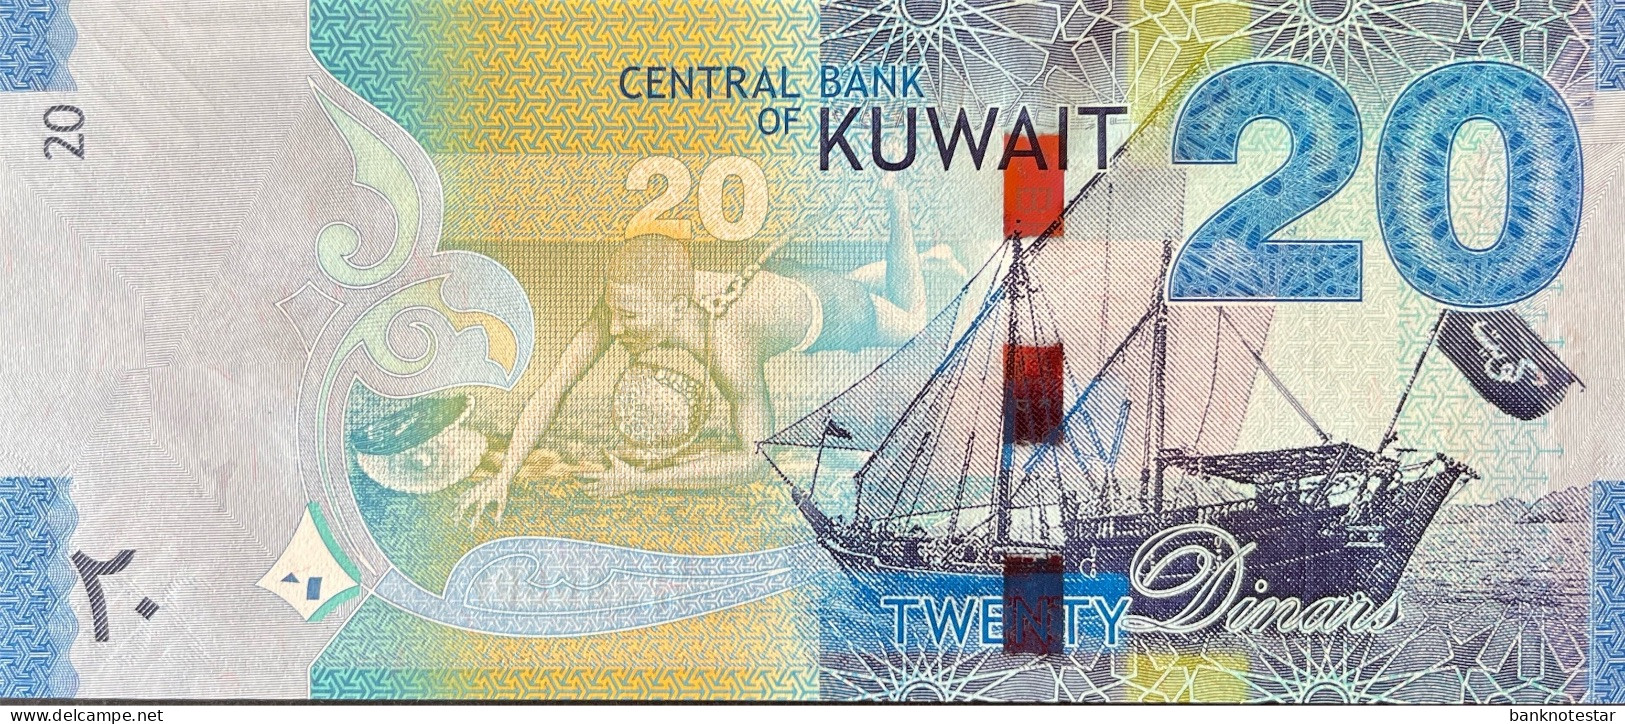 Kuwait 20 Dinars, P-34a (2014) - UNC - Kuwait